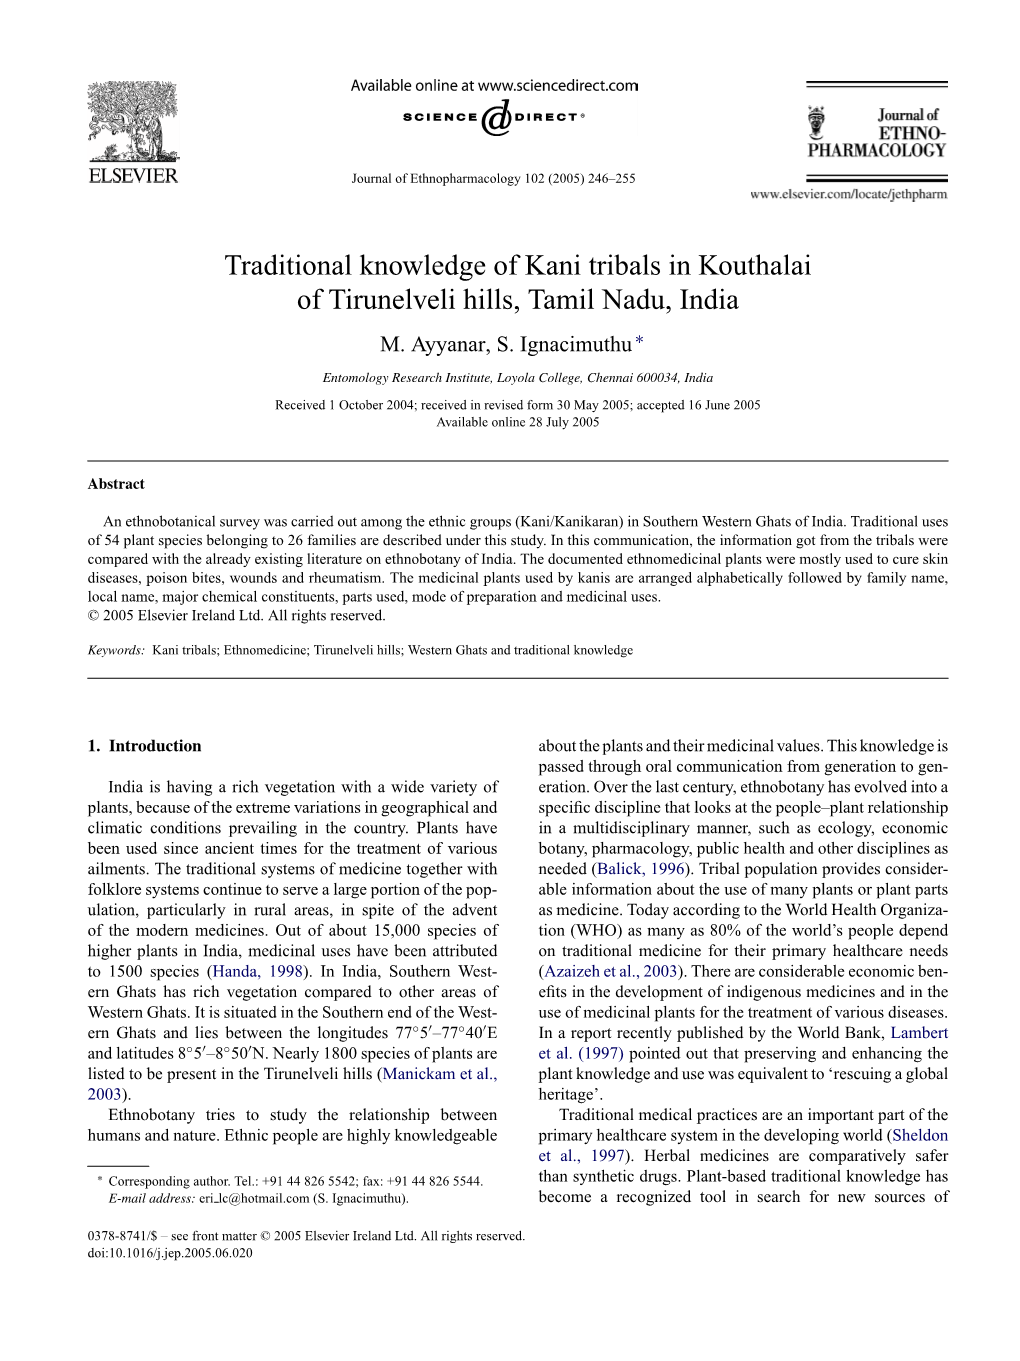 Traditional Knowledge of Kani Tribals in Kouthalai of Tirunelveli Hills, Tamil Nadu, India M